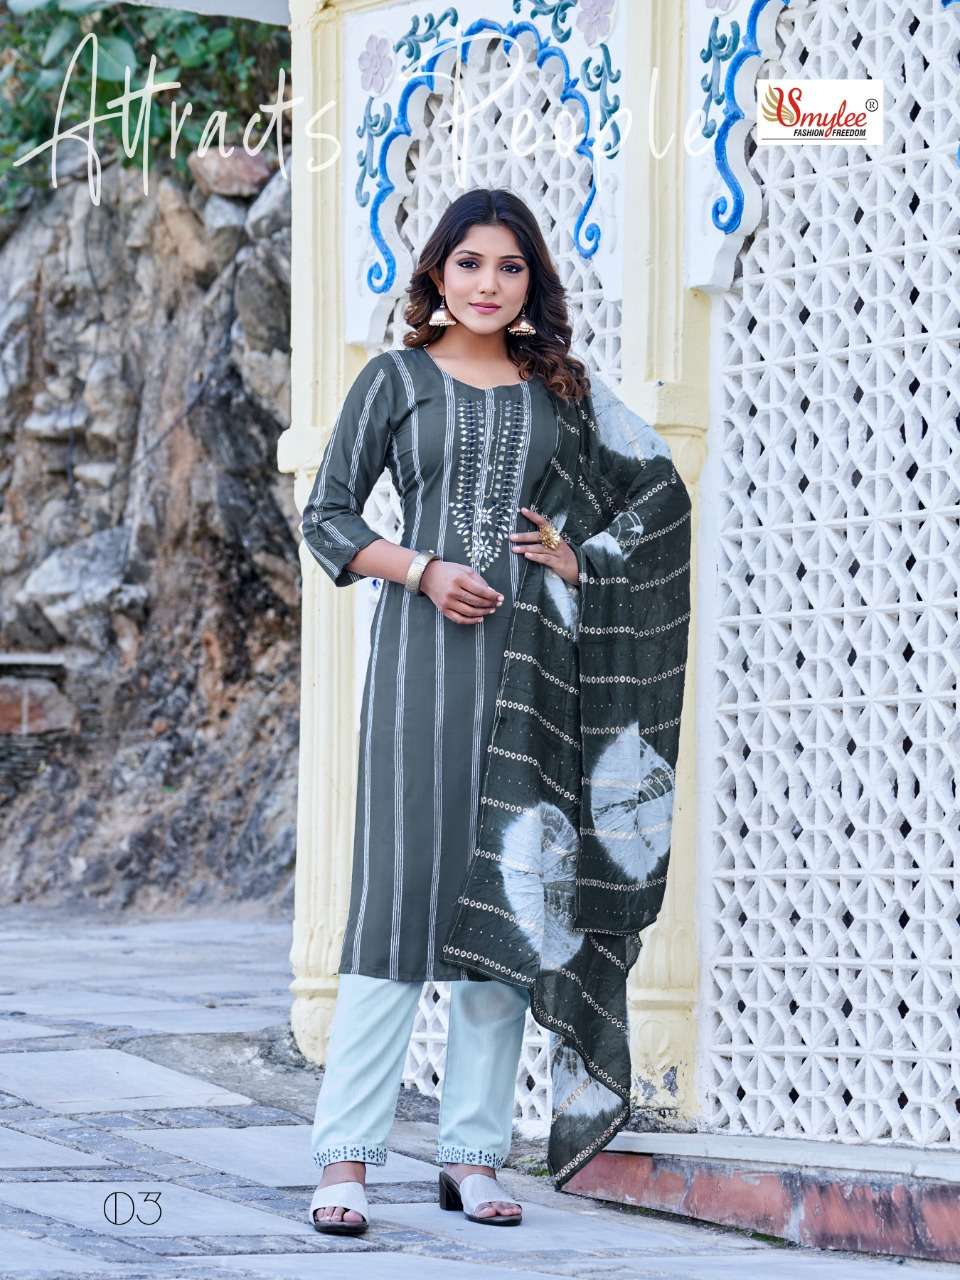 smylee fashion morni designer kurti pant with dupatta catalogue online supplier surat 